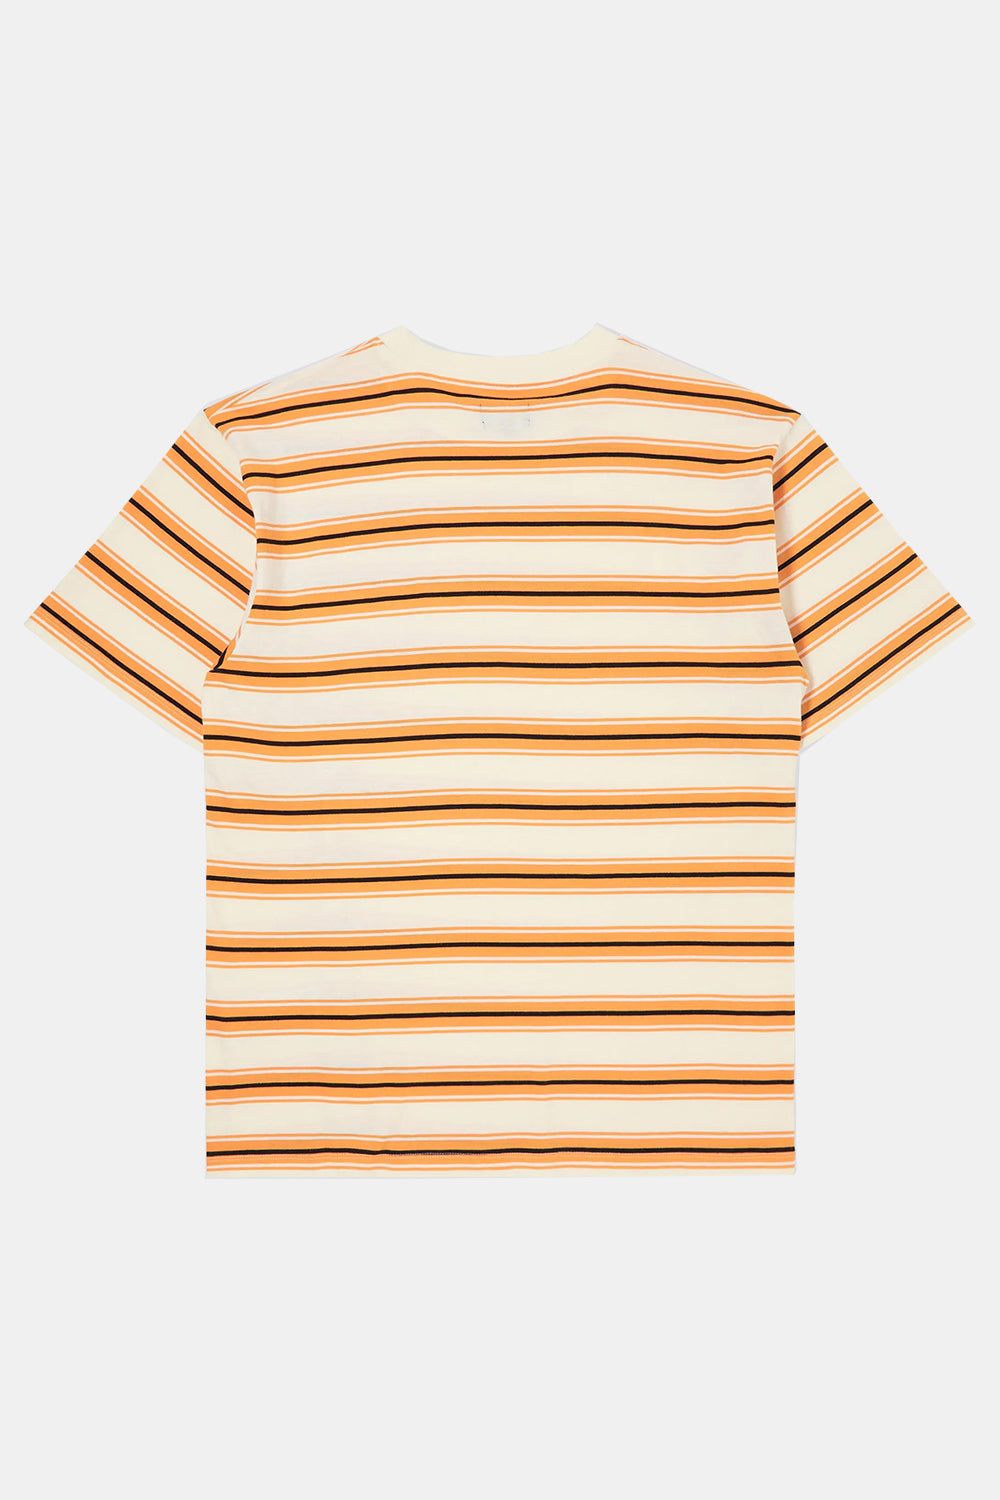 Edwin Quarter T-Shirt (Orange) | Number Six